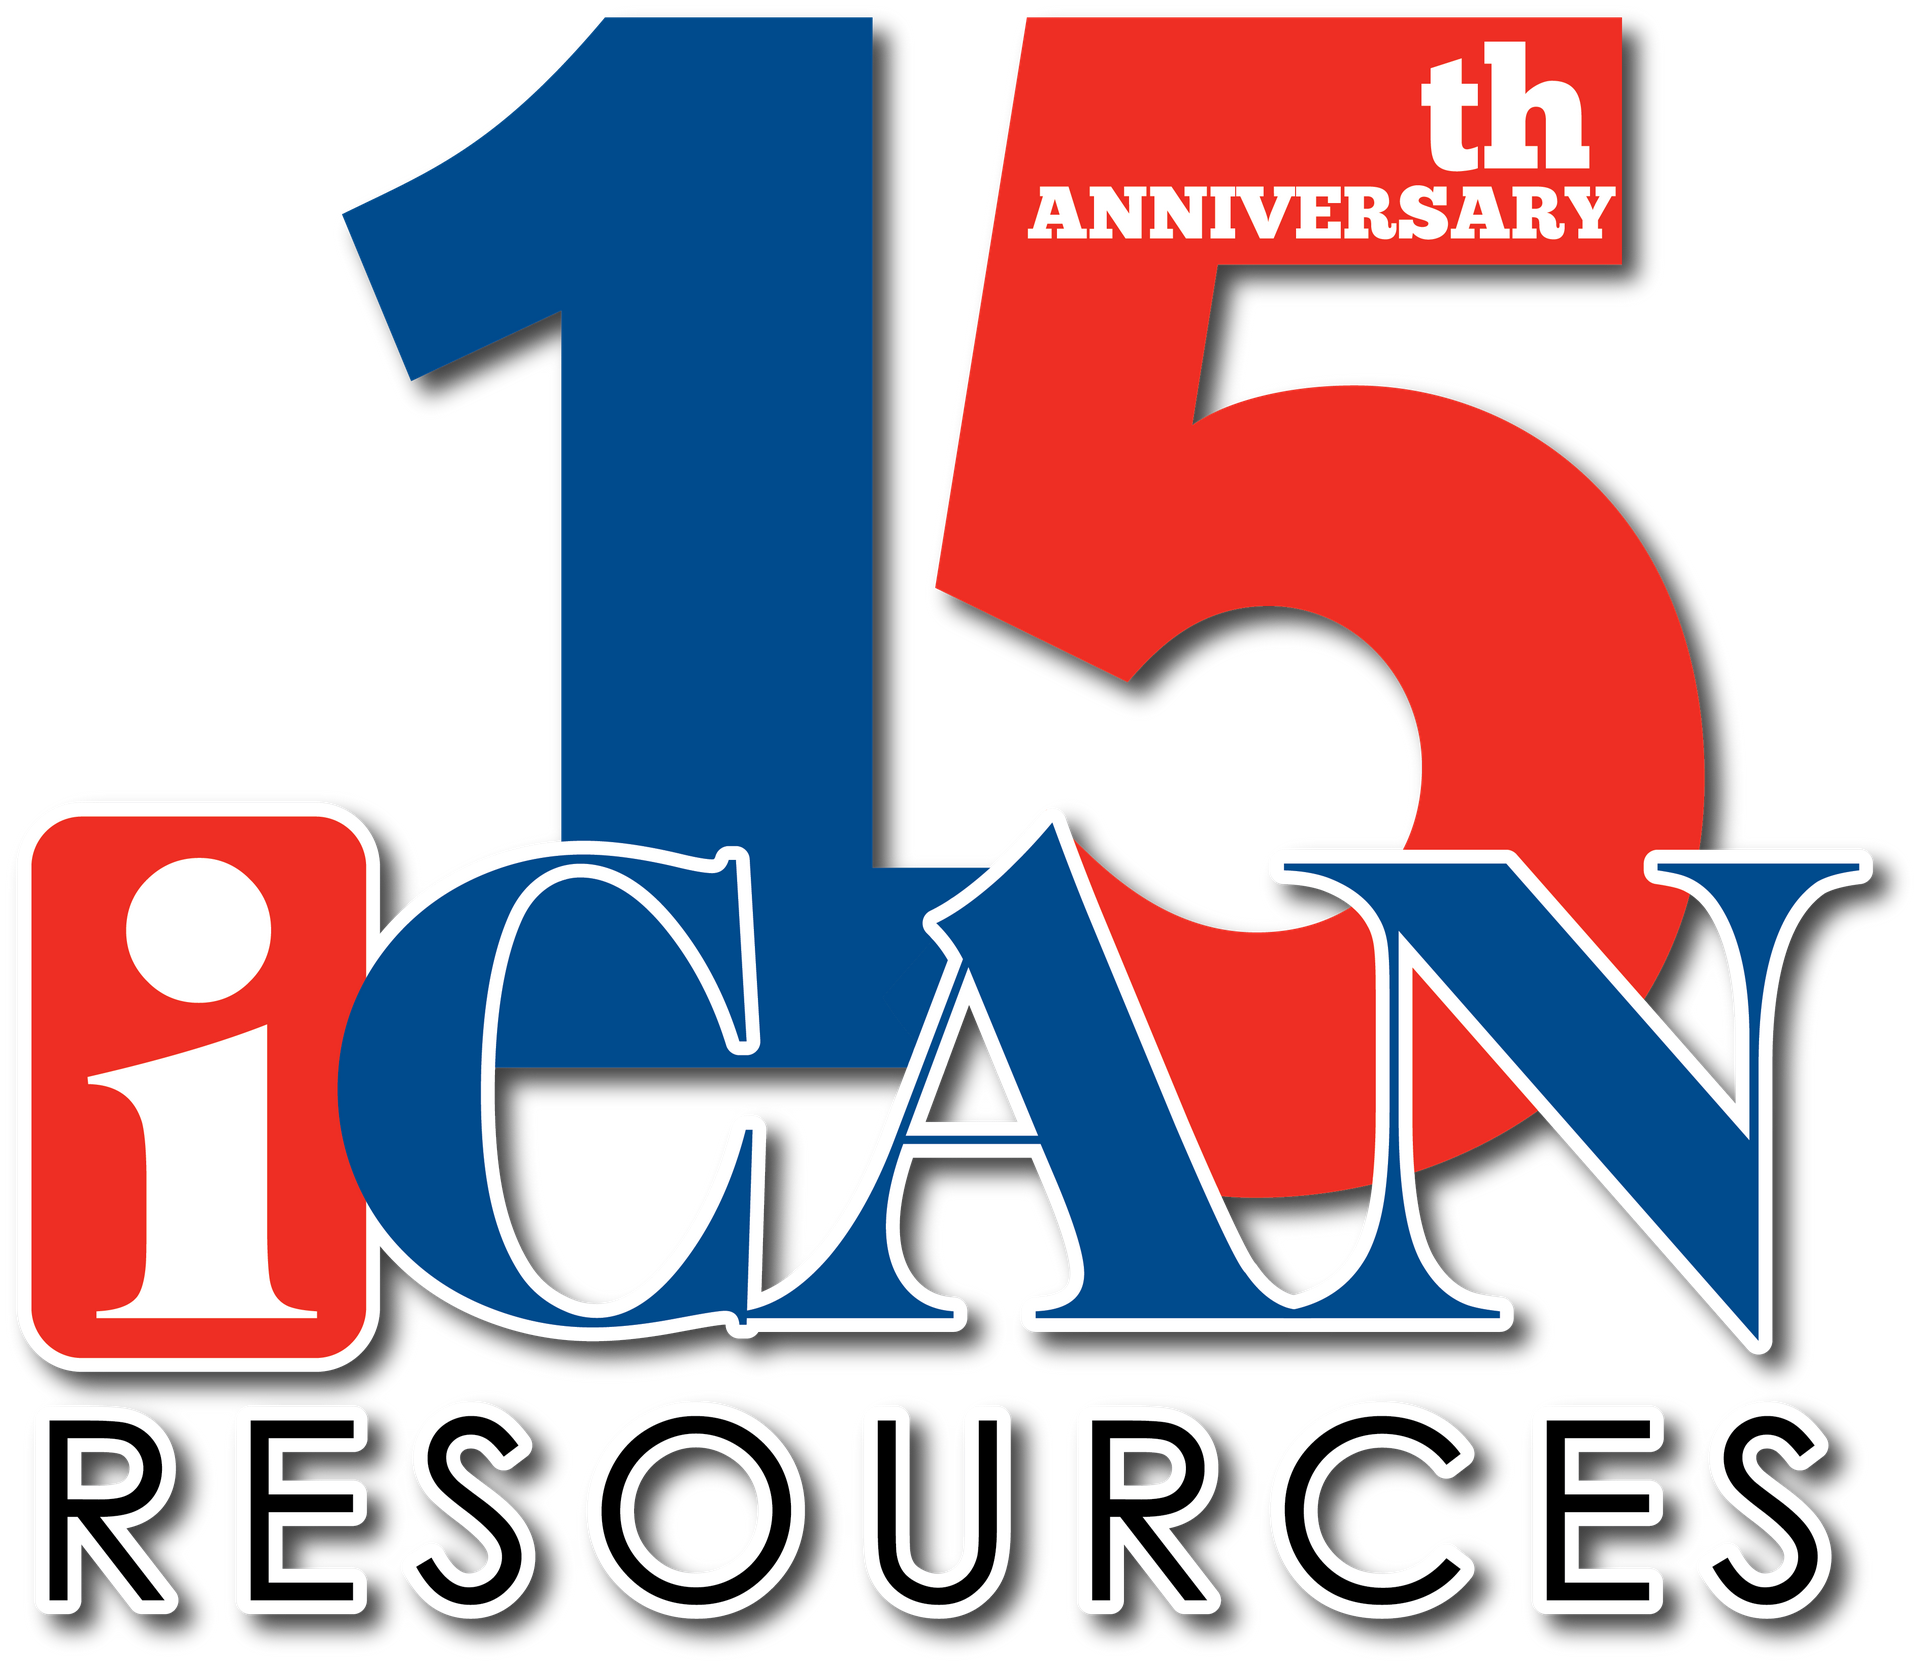 íCAN&apos;s 15th Anniversary Logo